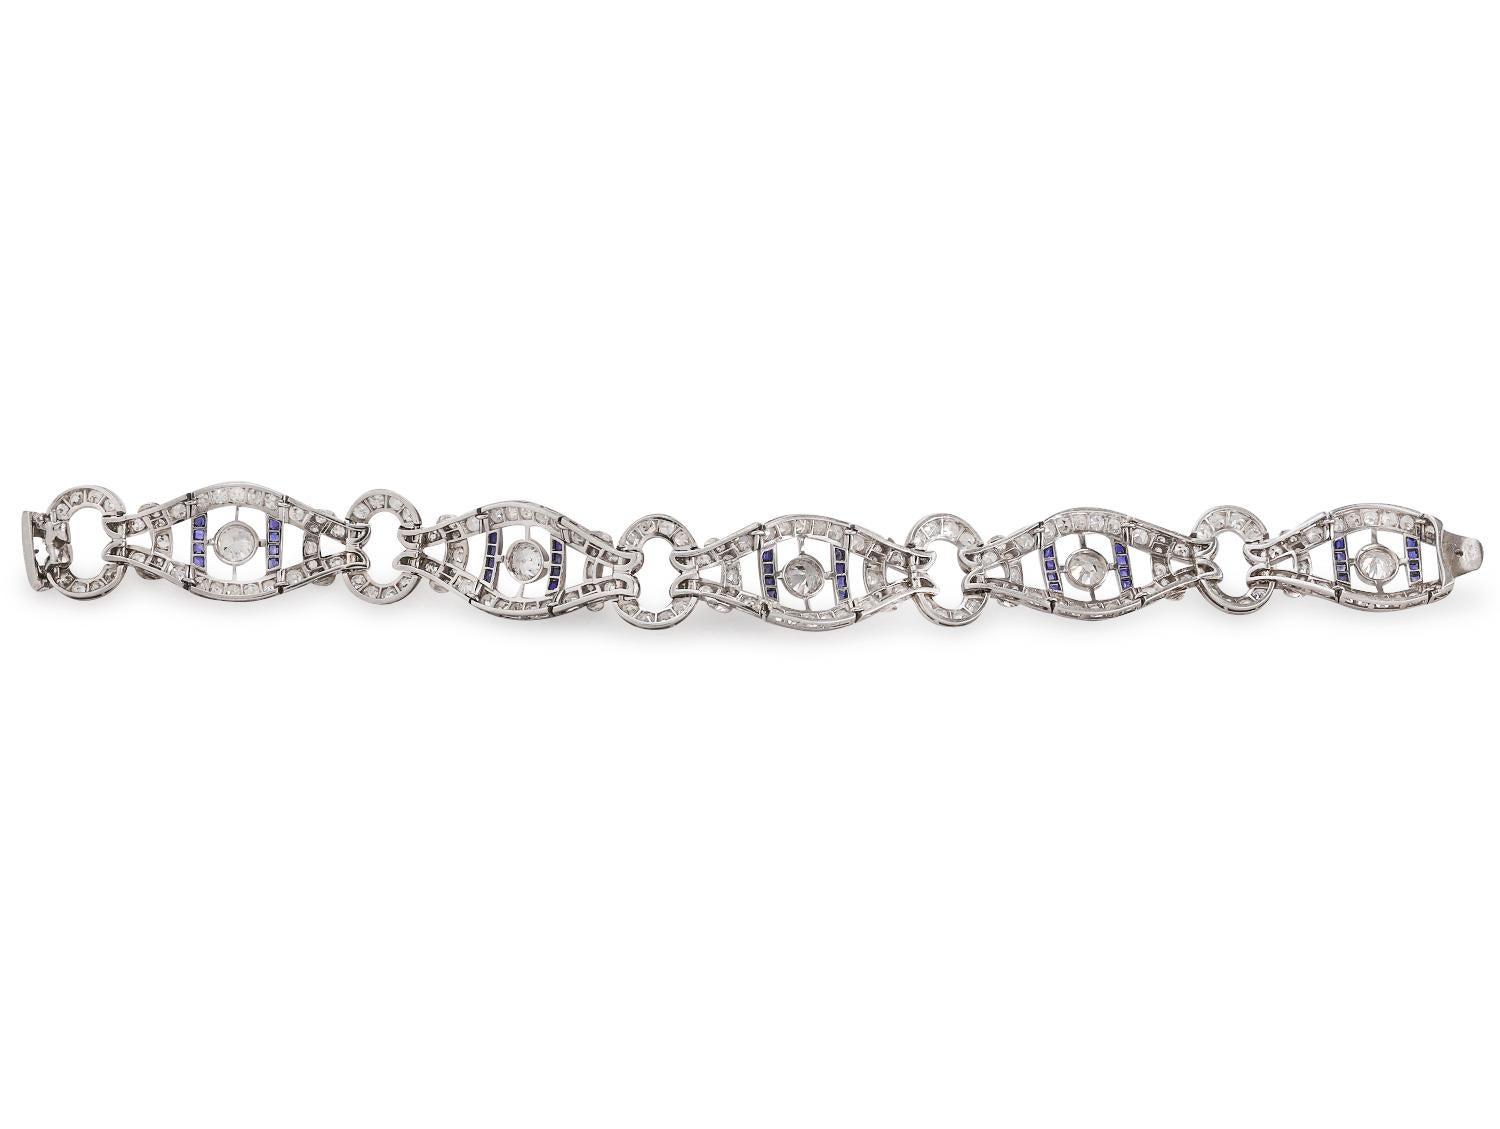 French Vintage 1920s Sapphire Diamond Bracelet For Sale 2